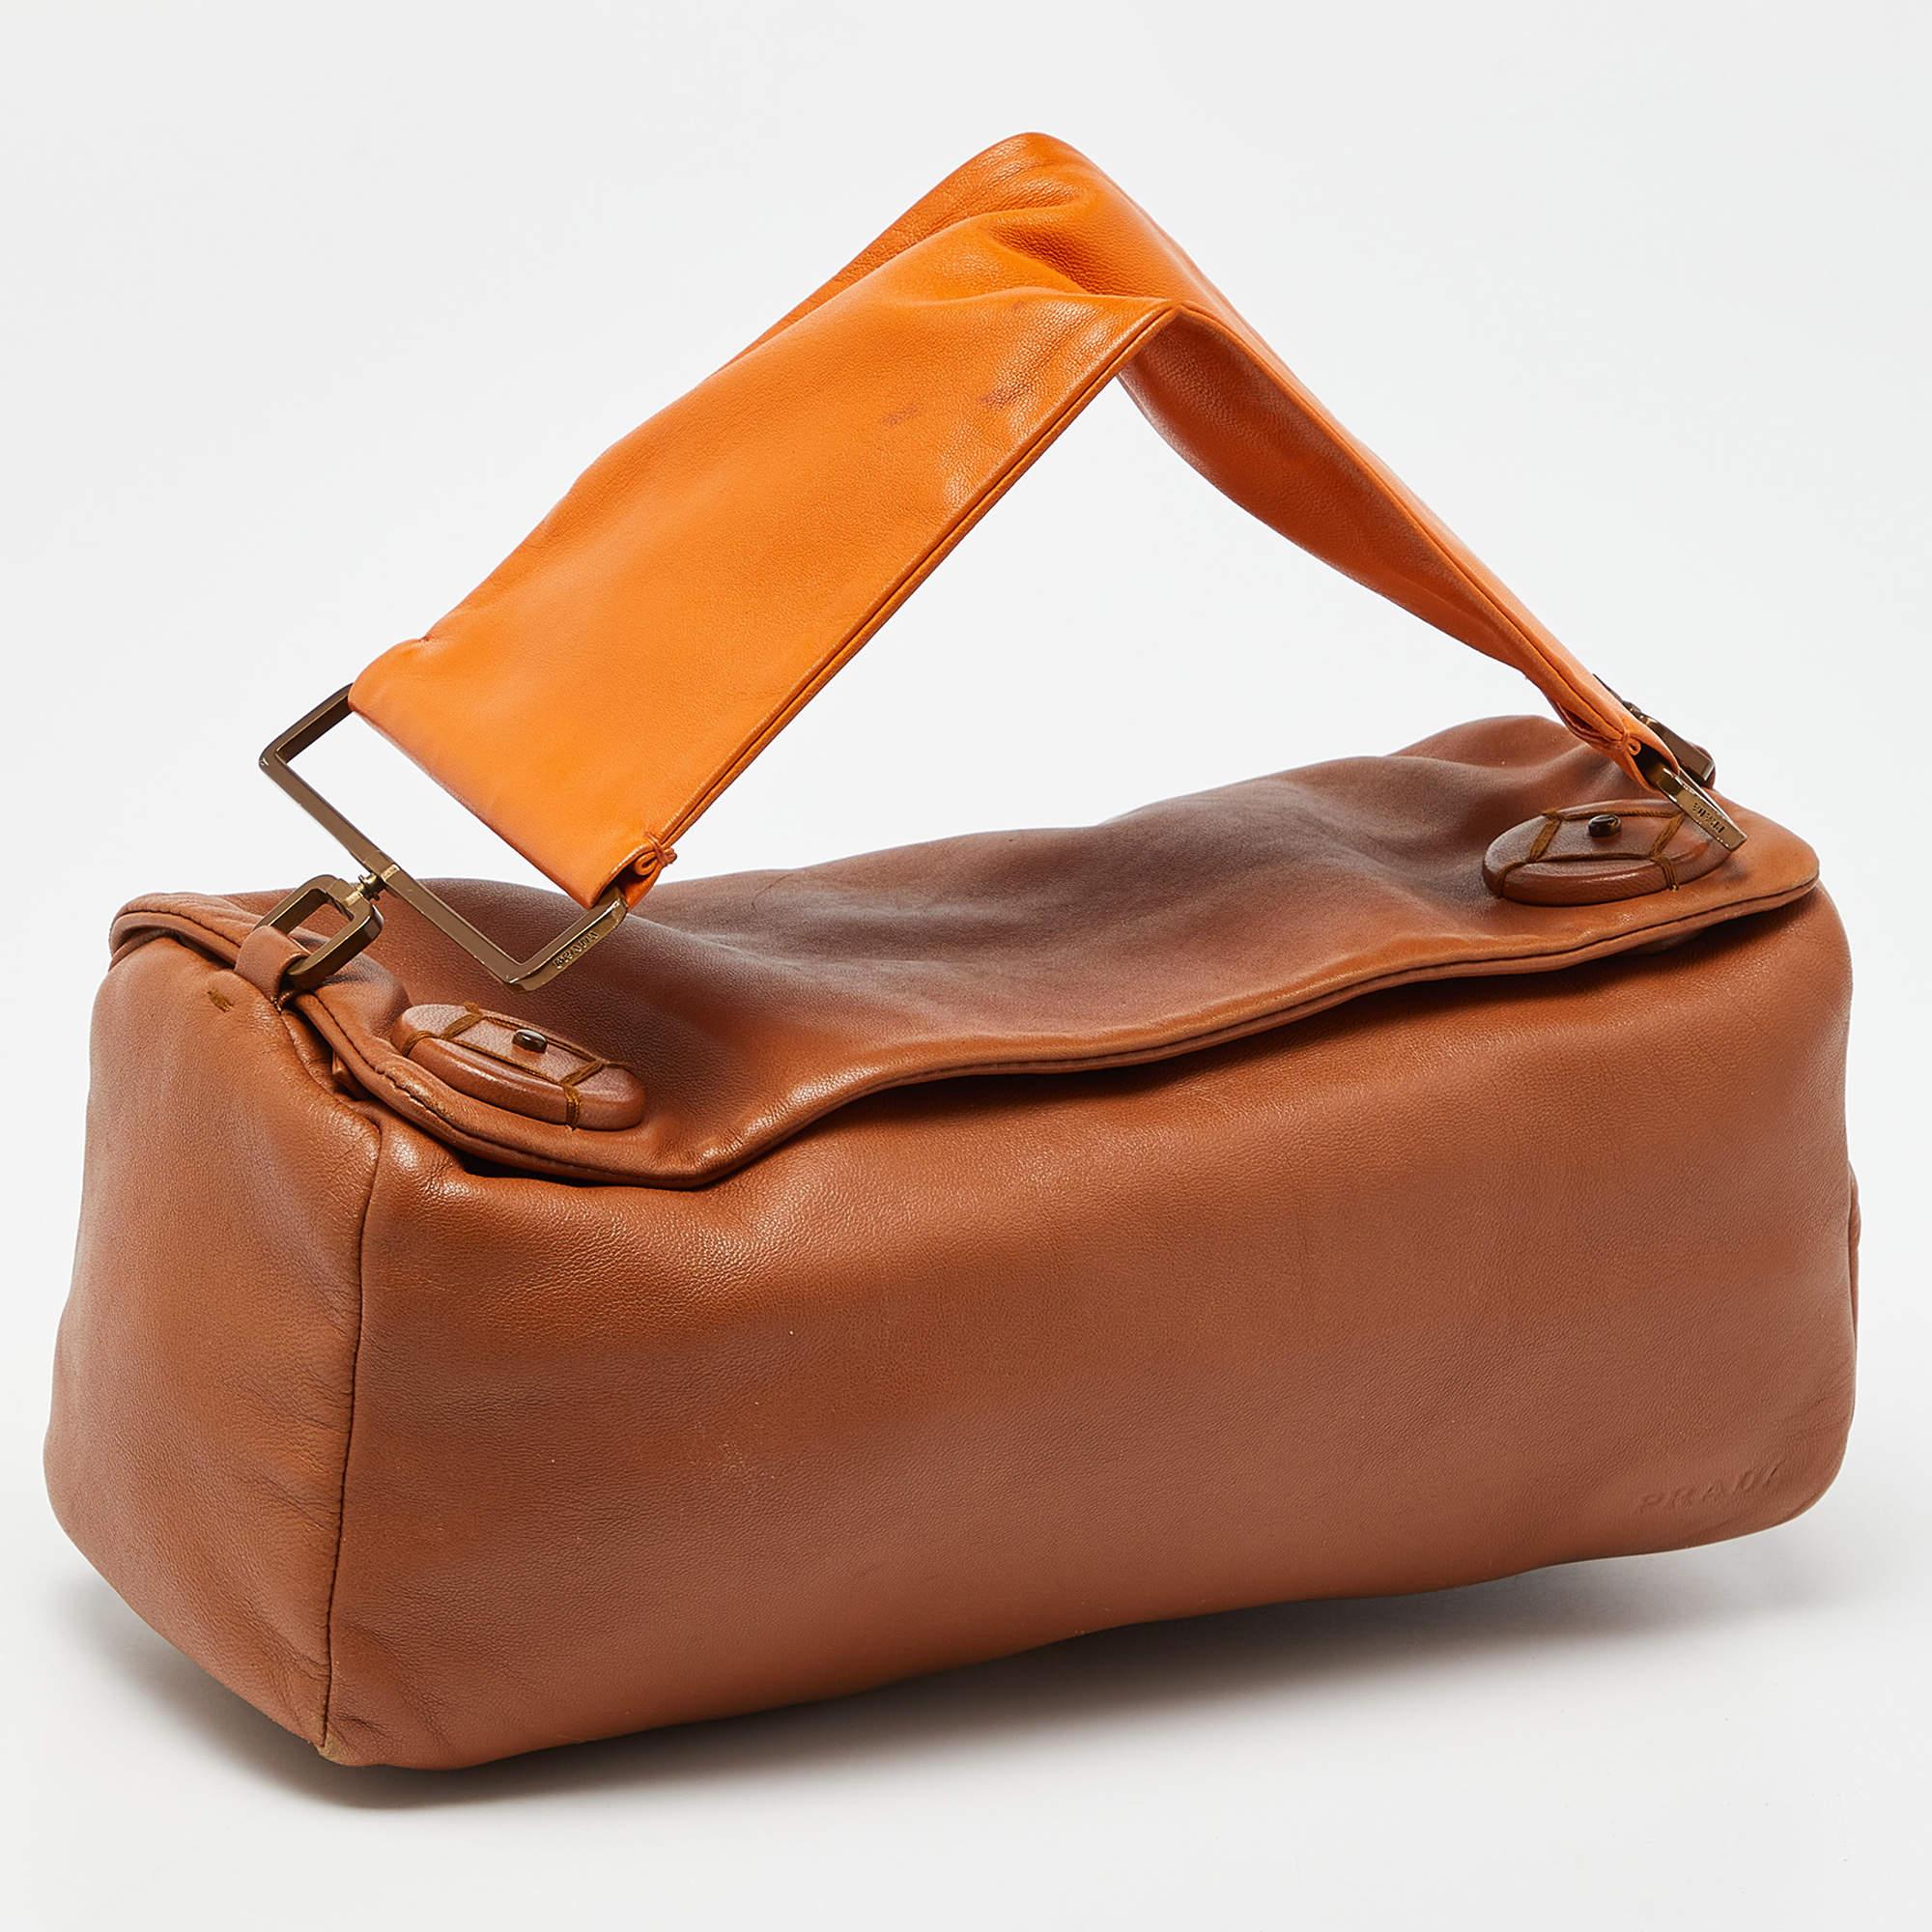 Women's Prada Tan/Orange Leather Satchel For Sale